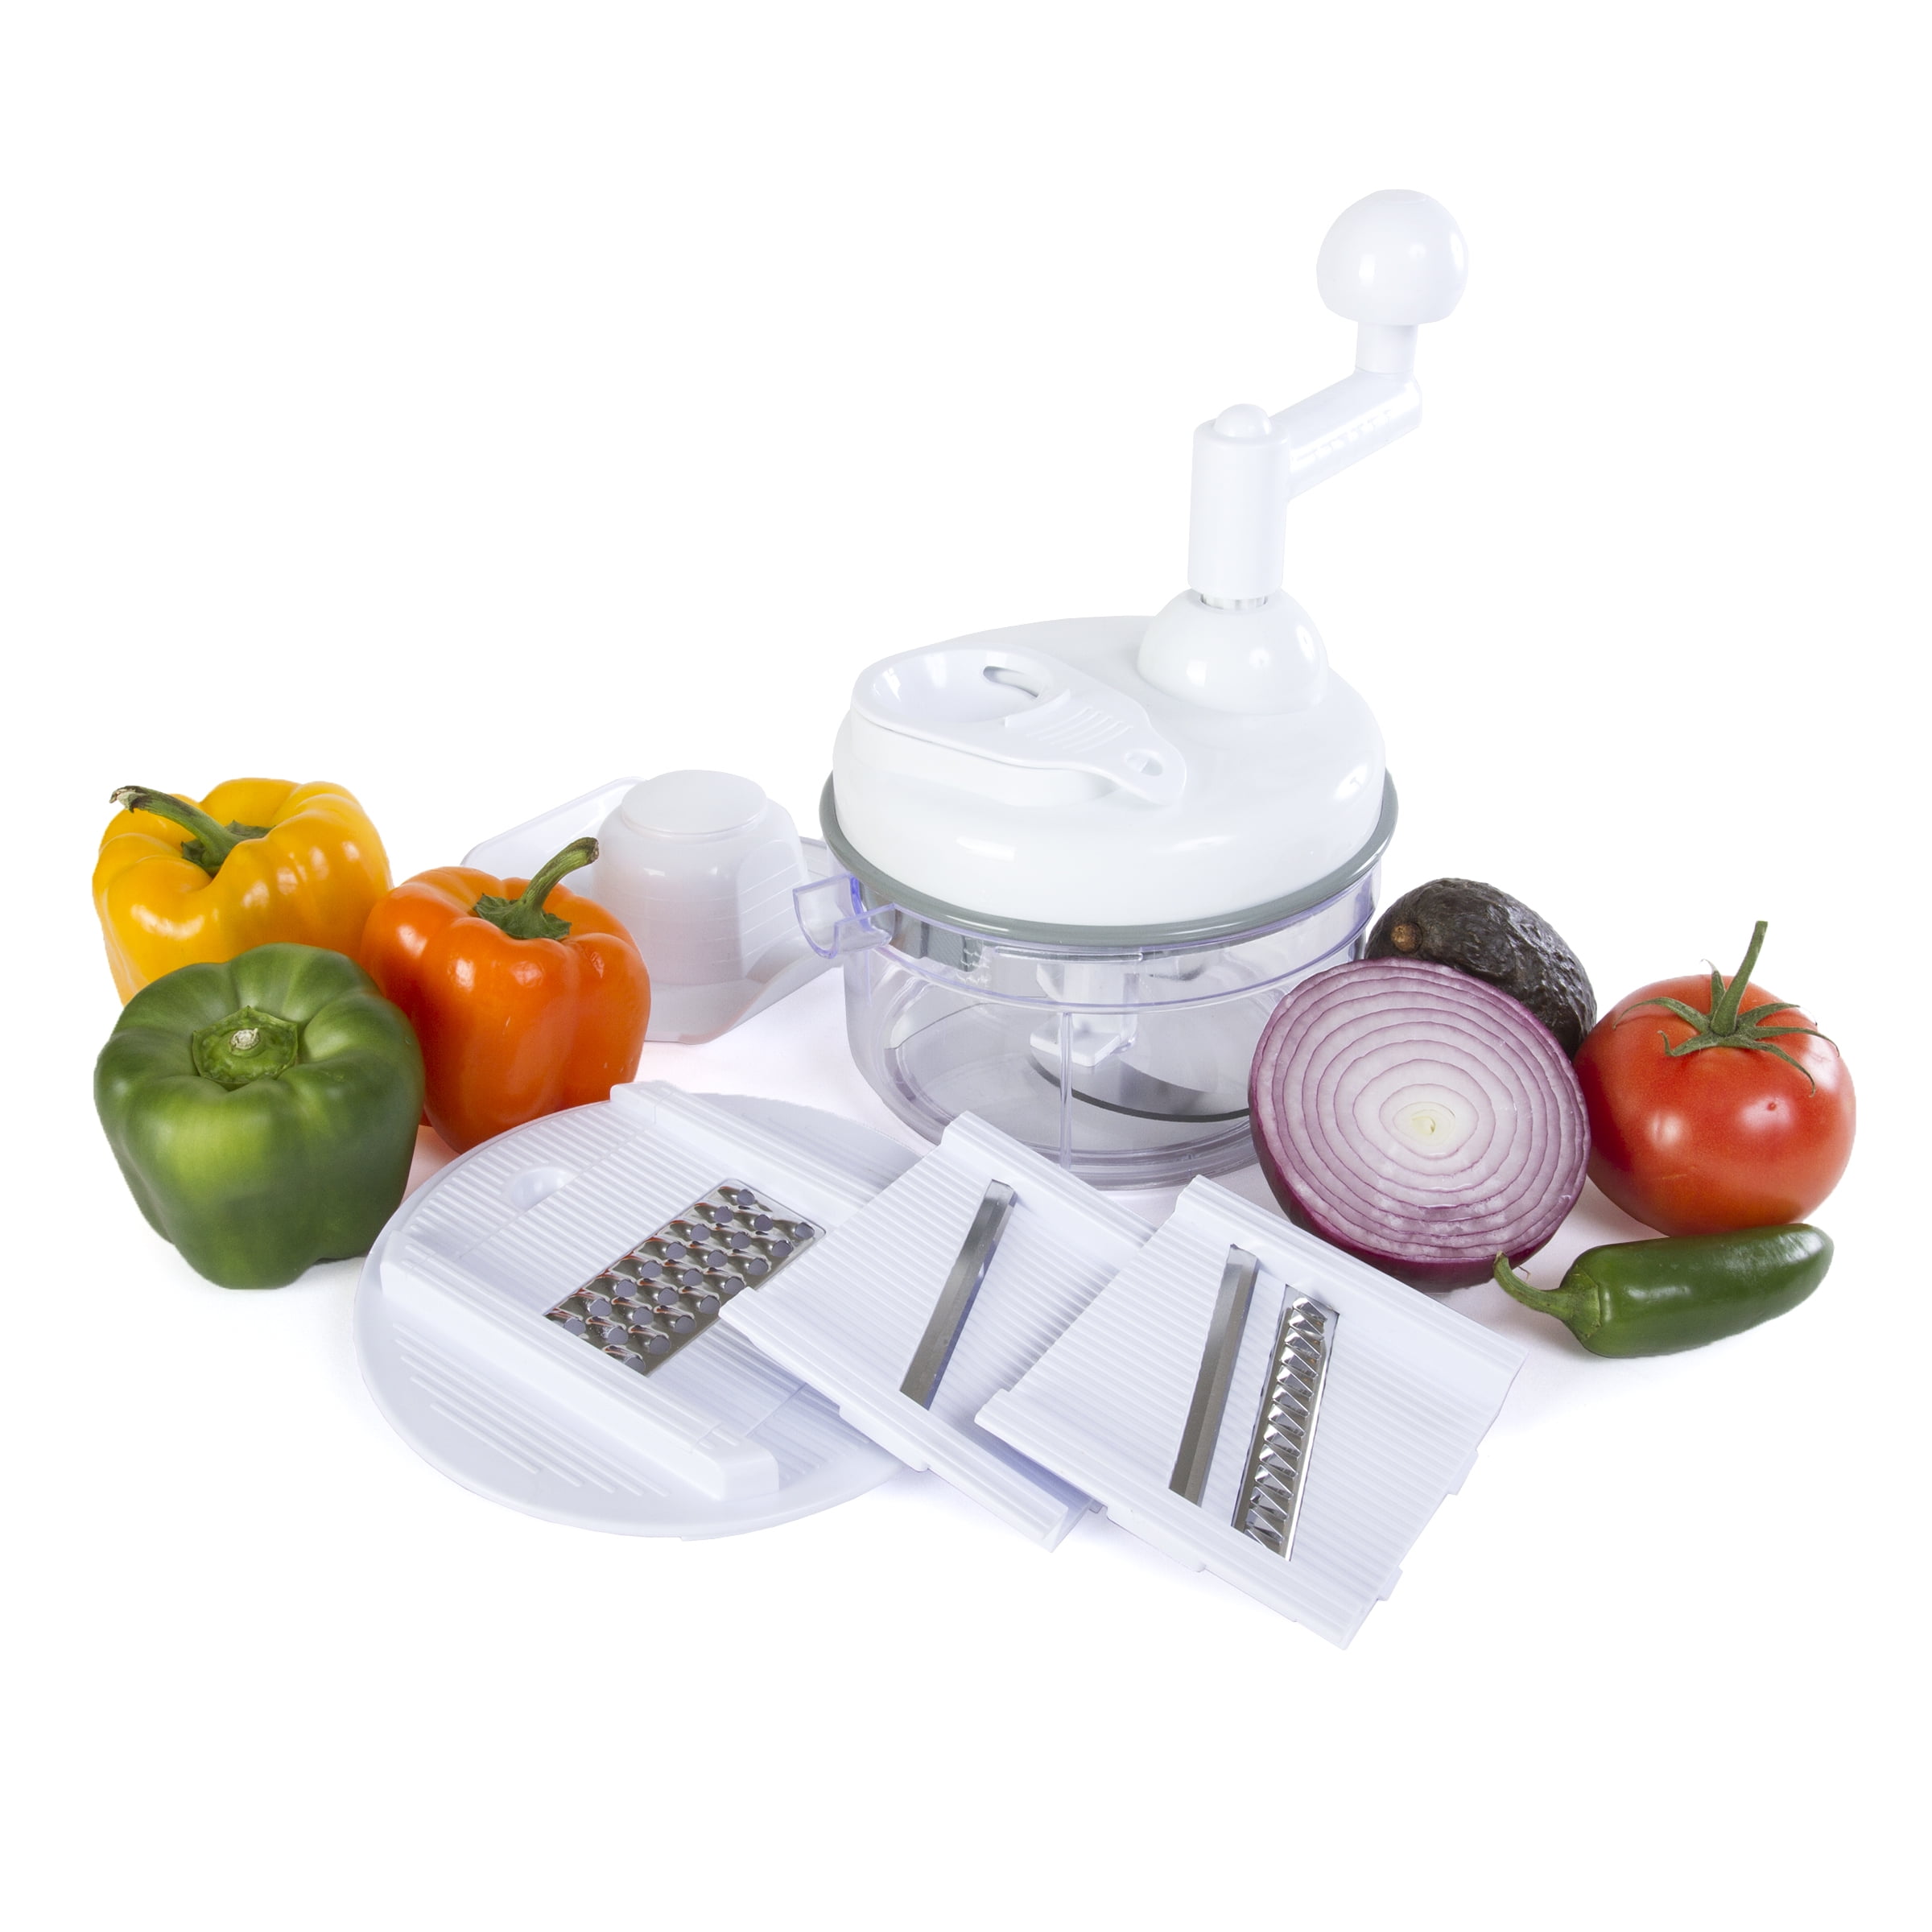 Chefdini Salsa Maker Vegetable Chopper Food Processor, White